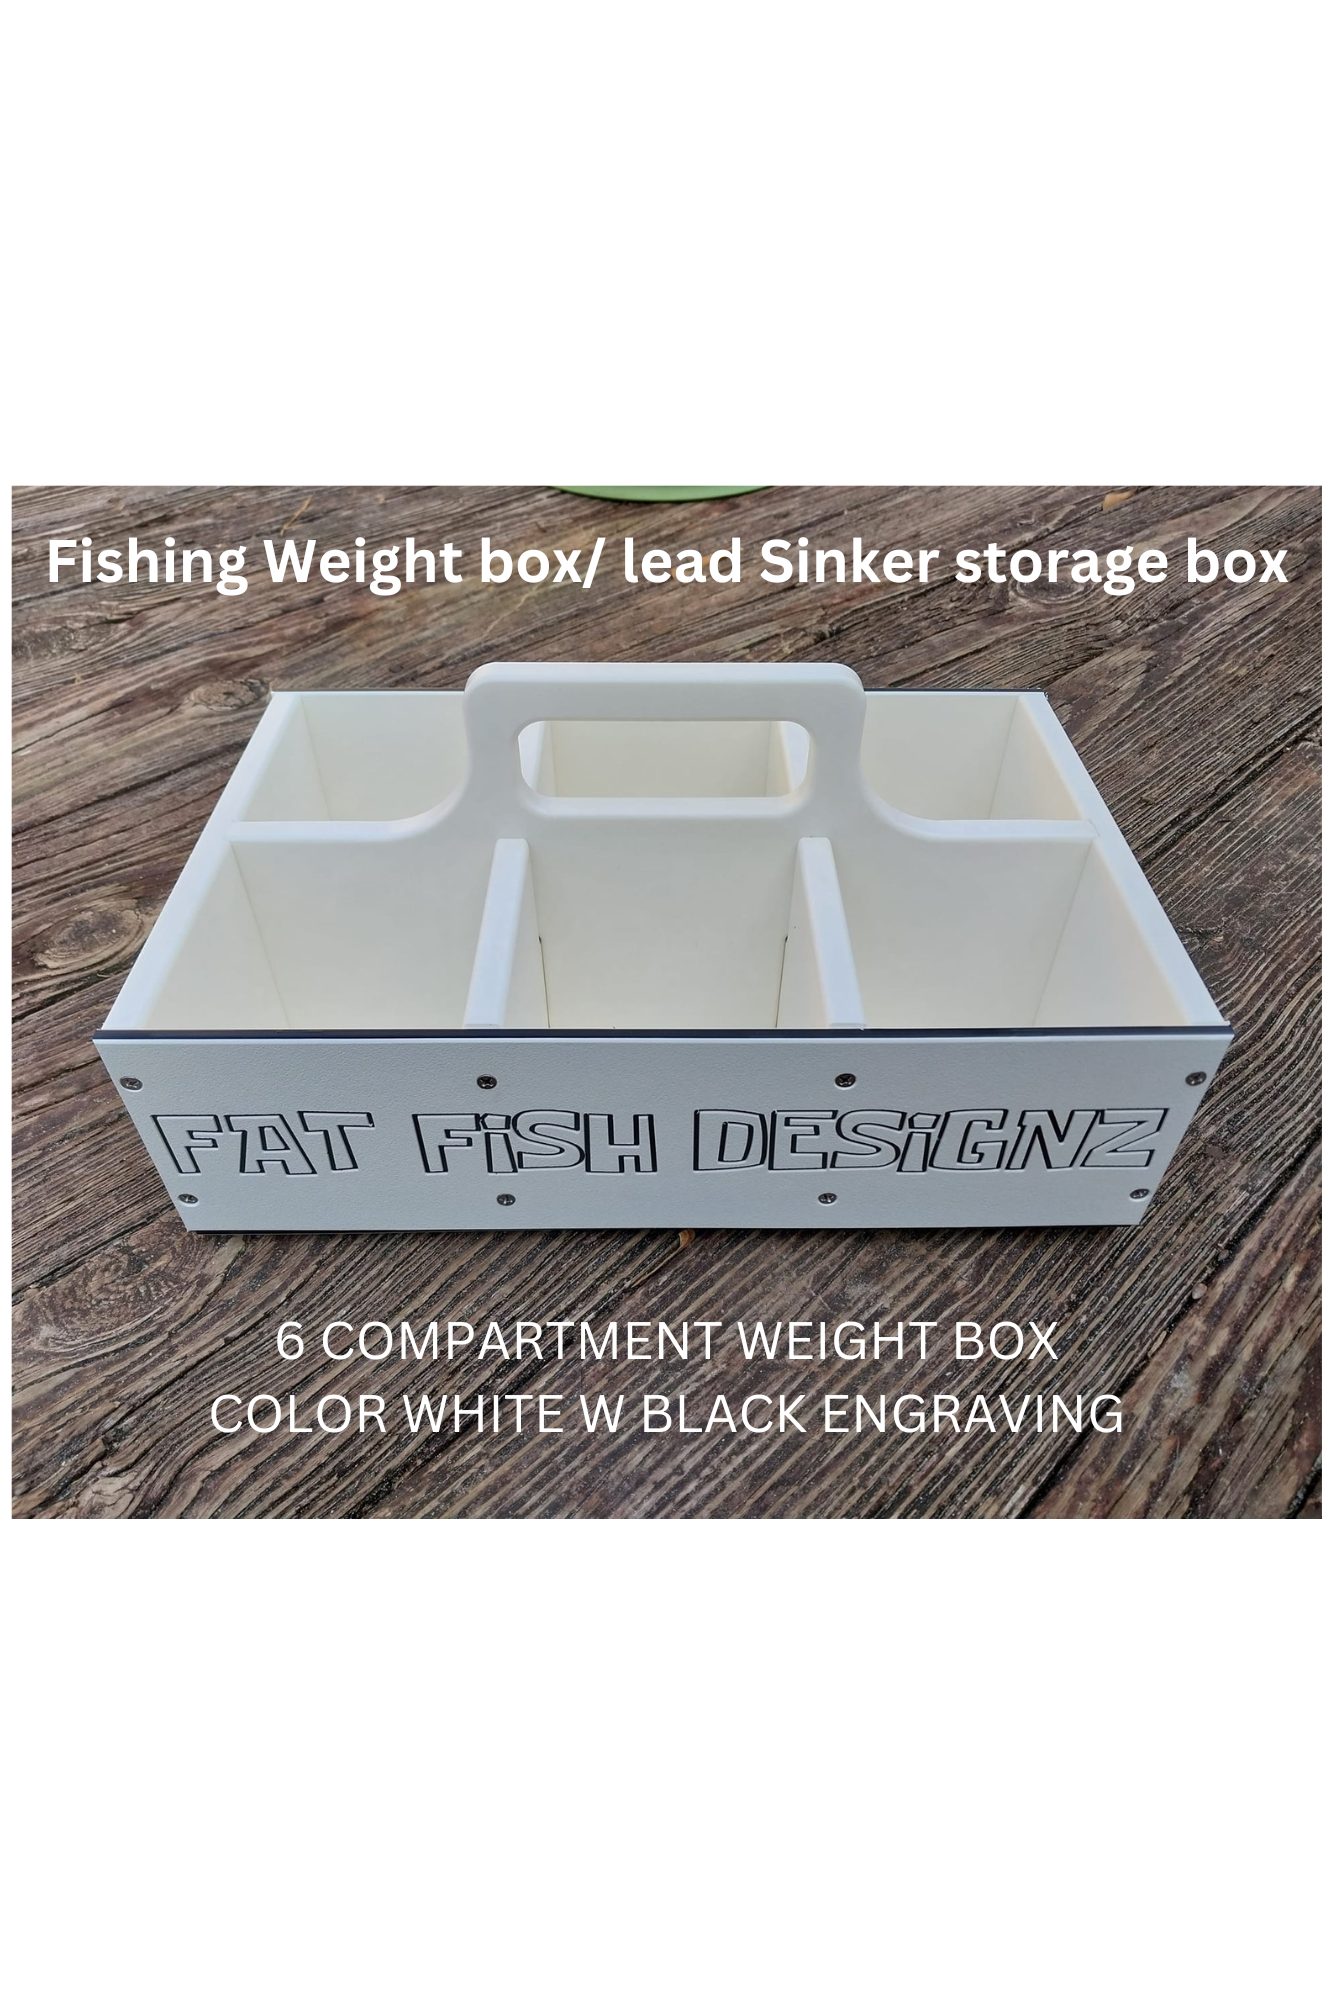 Weight box/ lead sinker storage box